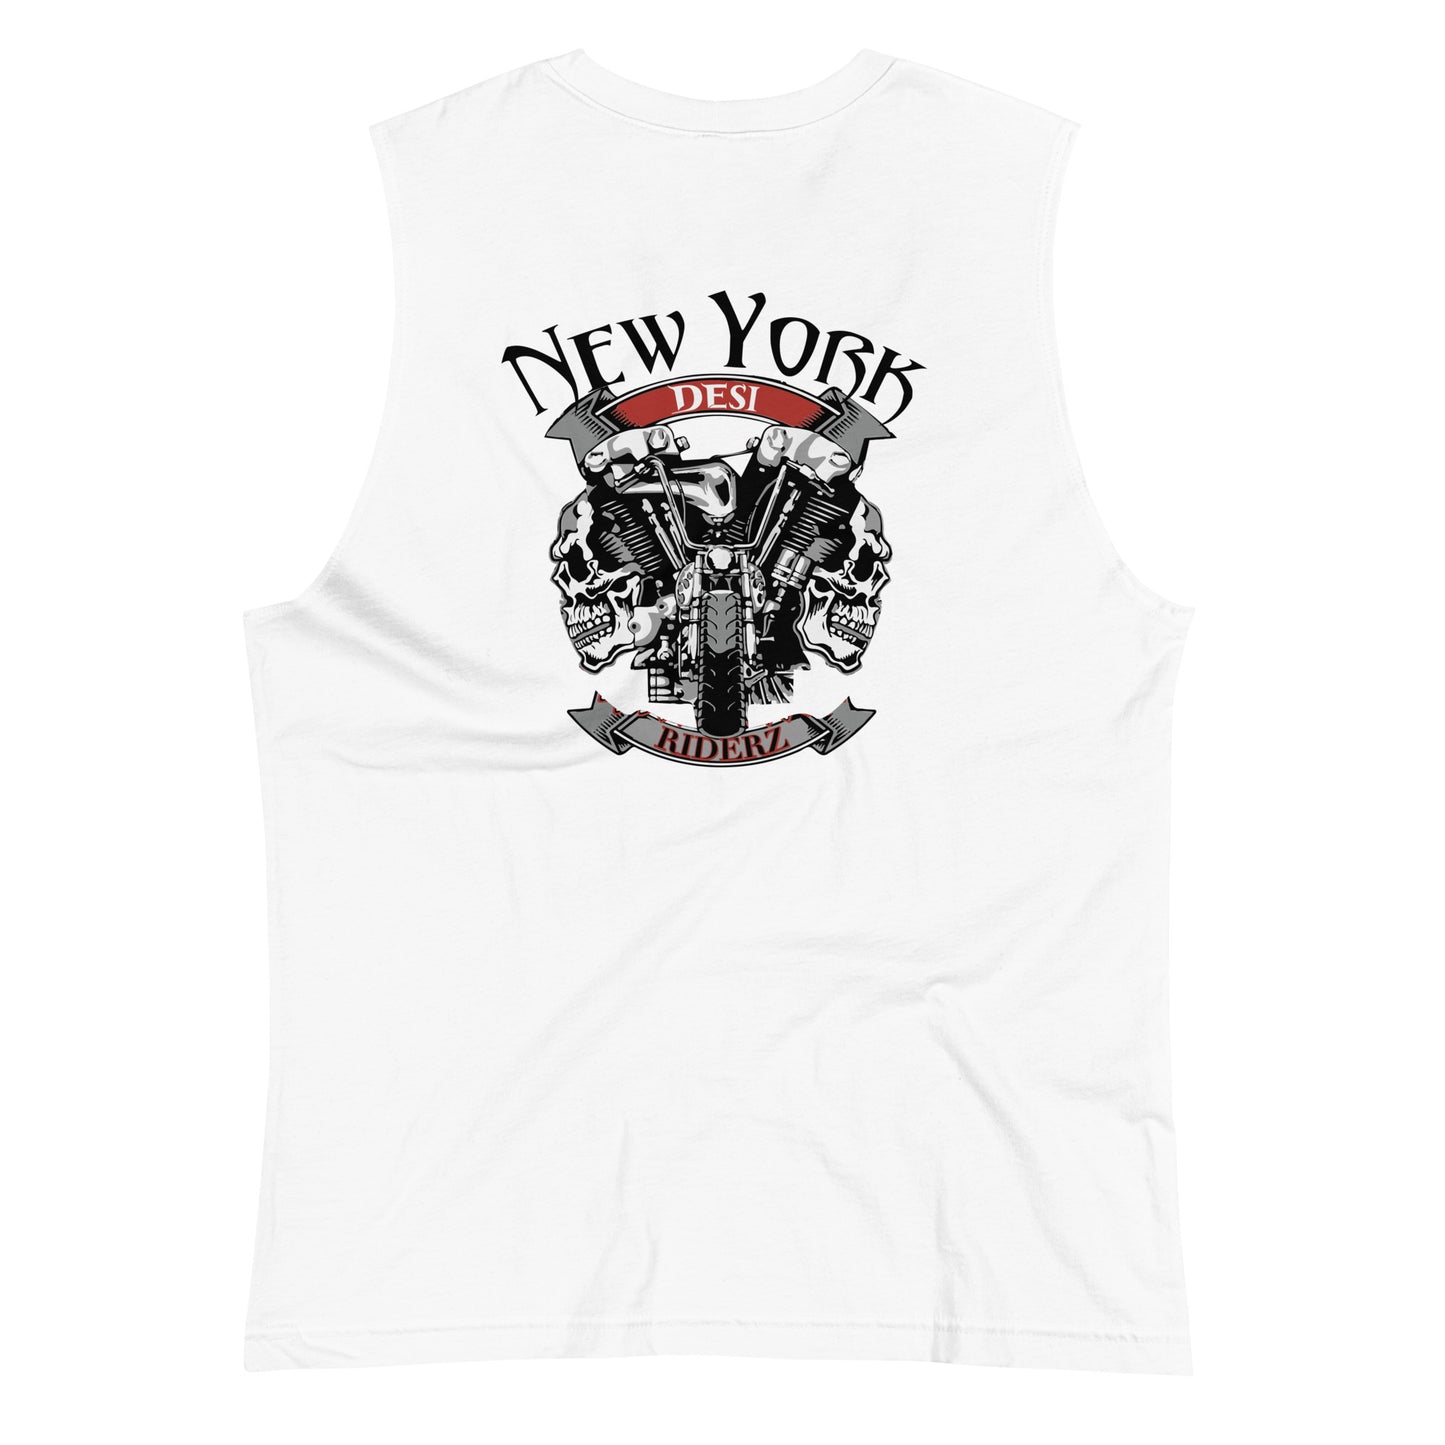 NY Desi Riderz - Muscle Shirt